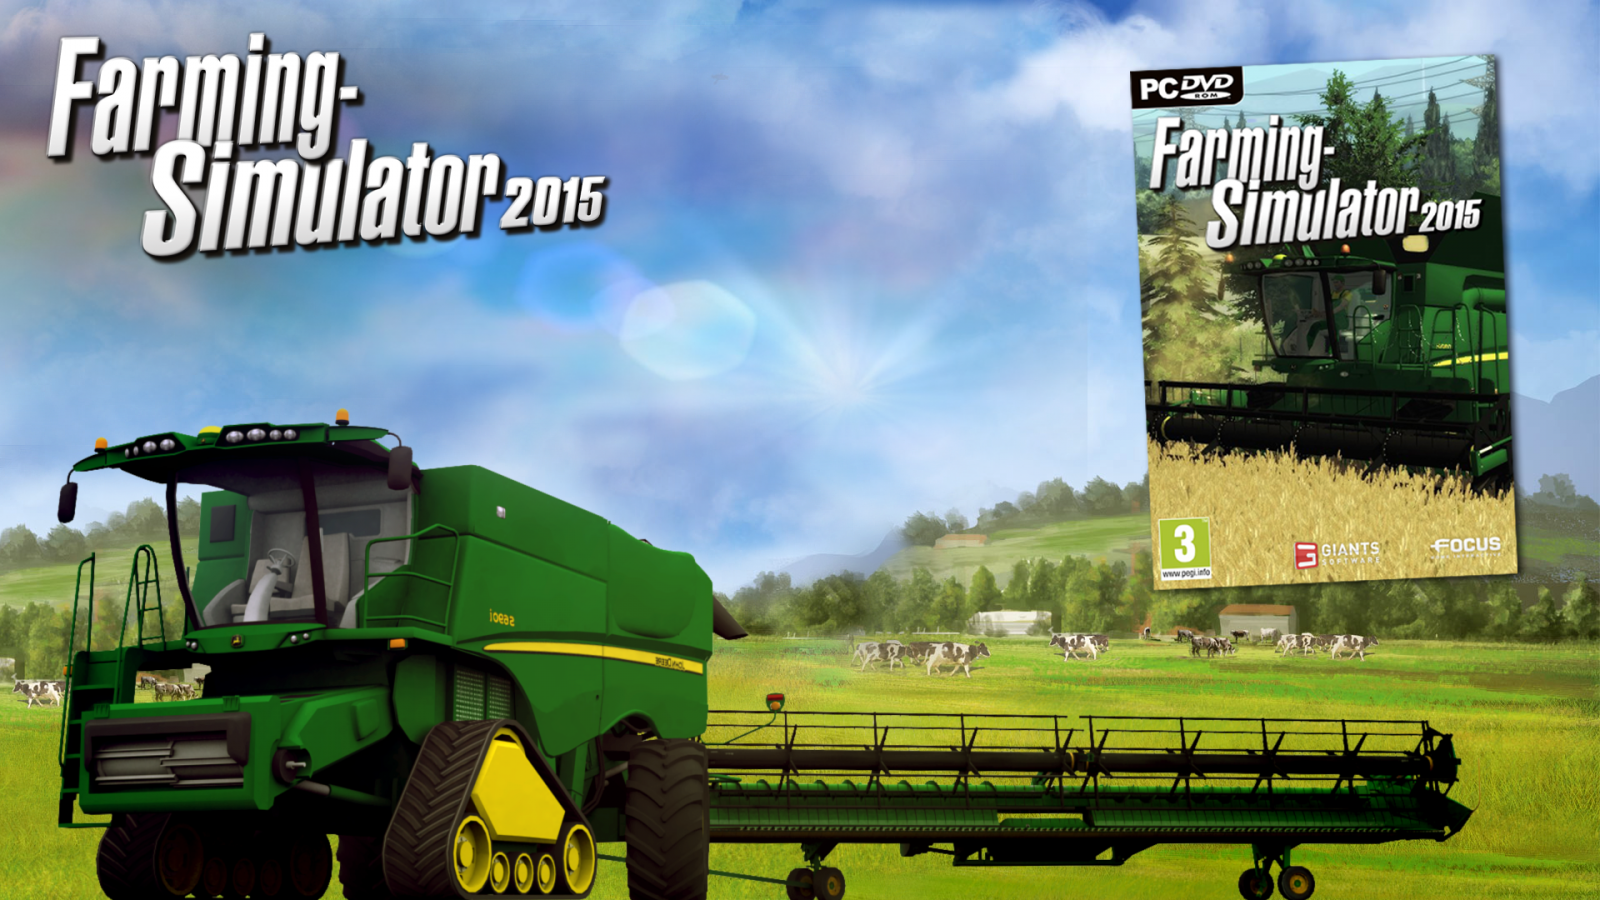 free download farming simulator 13 mobile